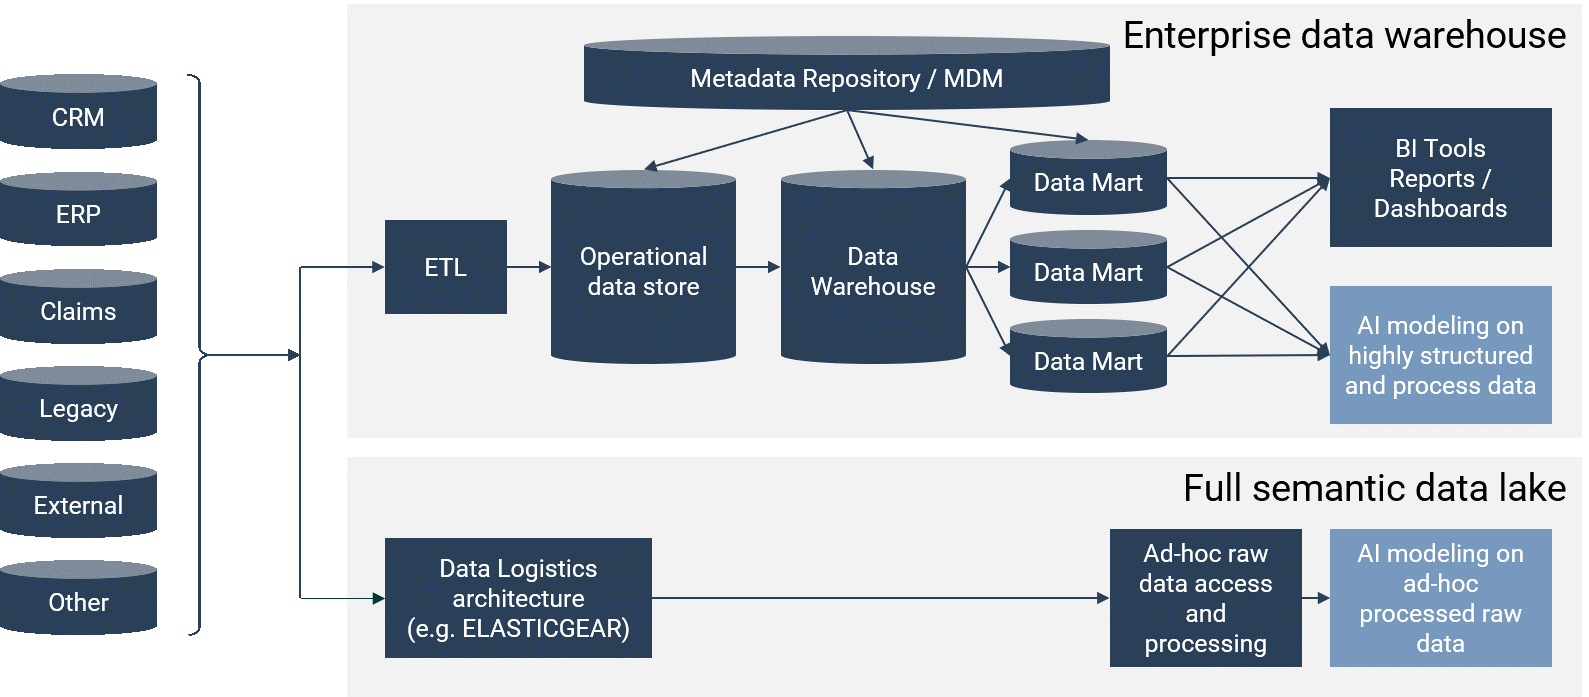 Enterprise data warehouse vs. full semantic data lake architecture